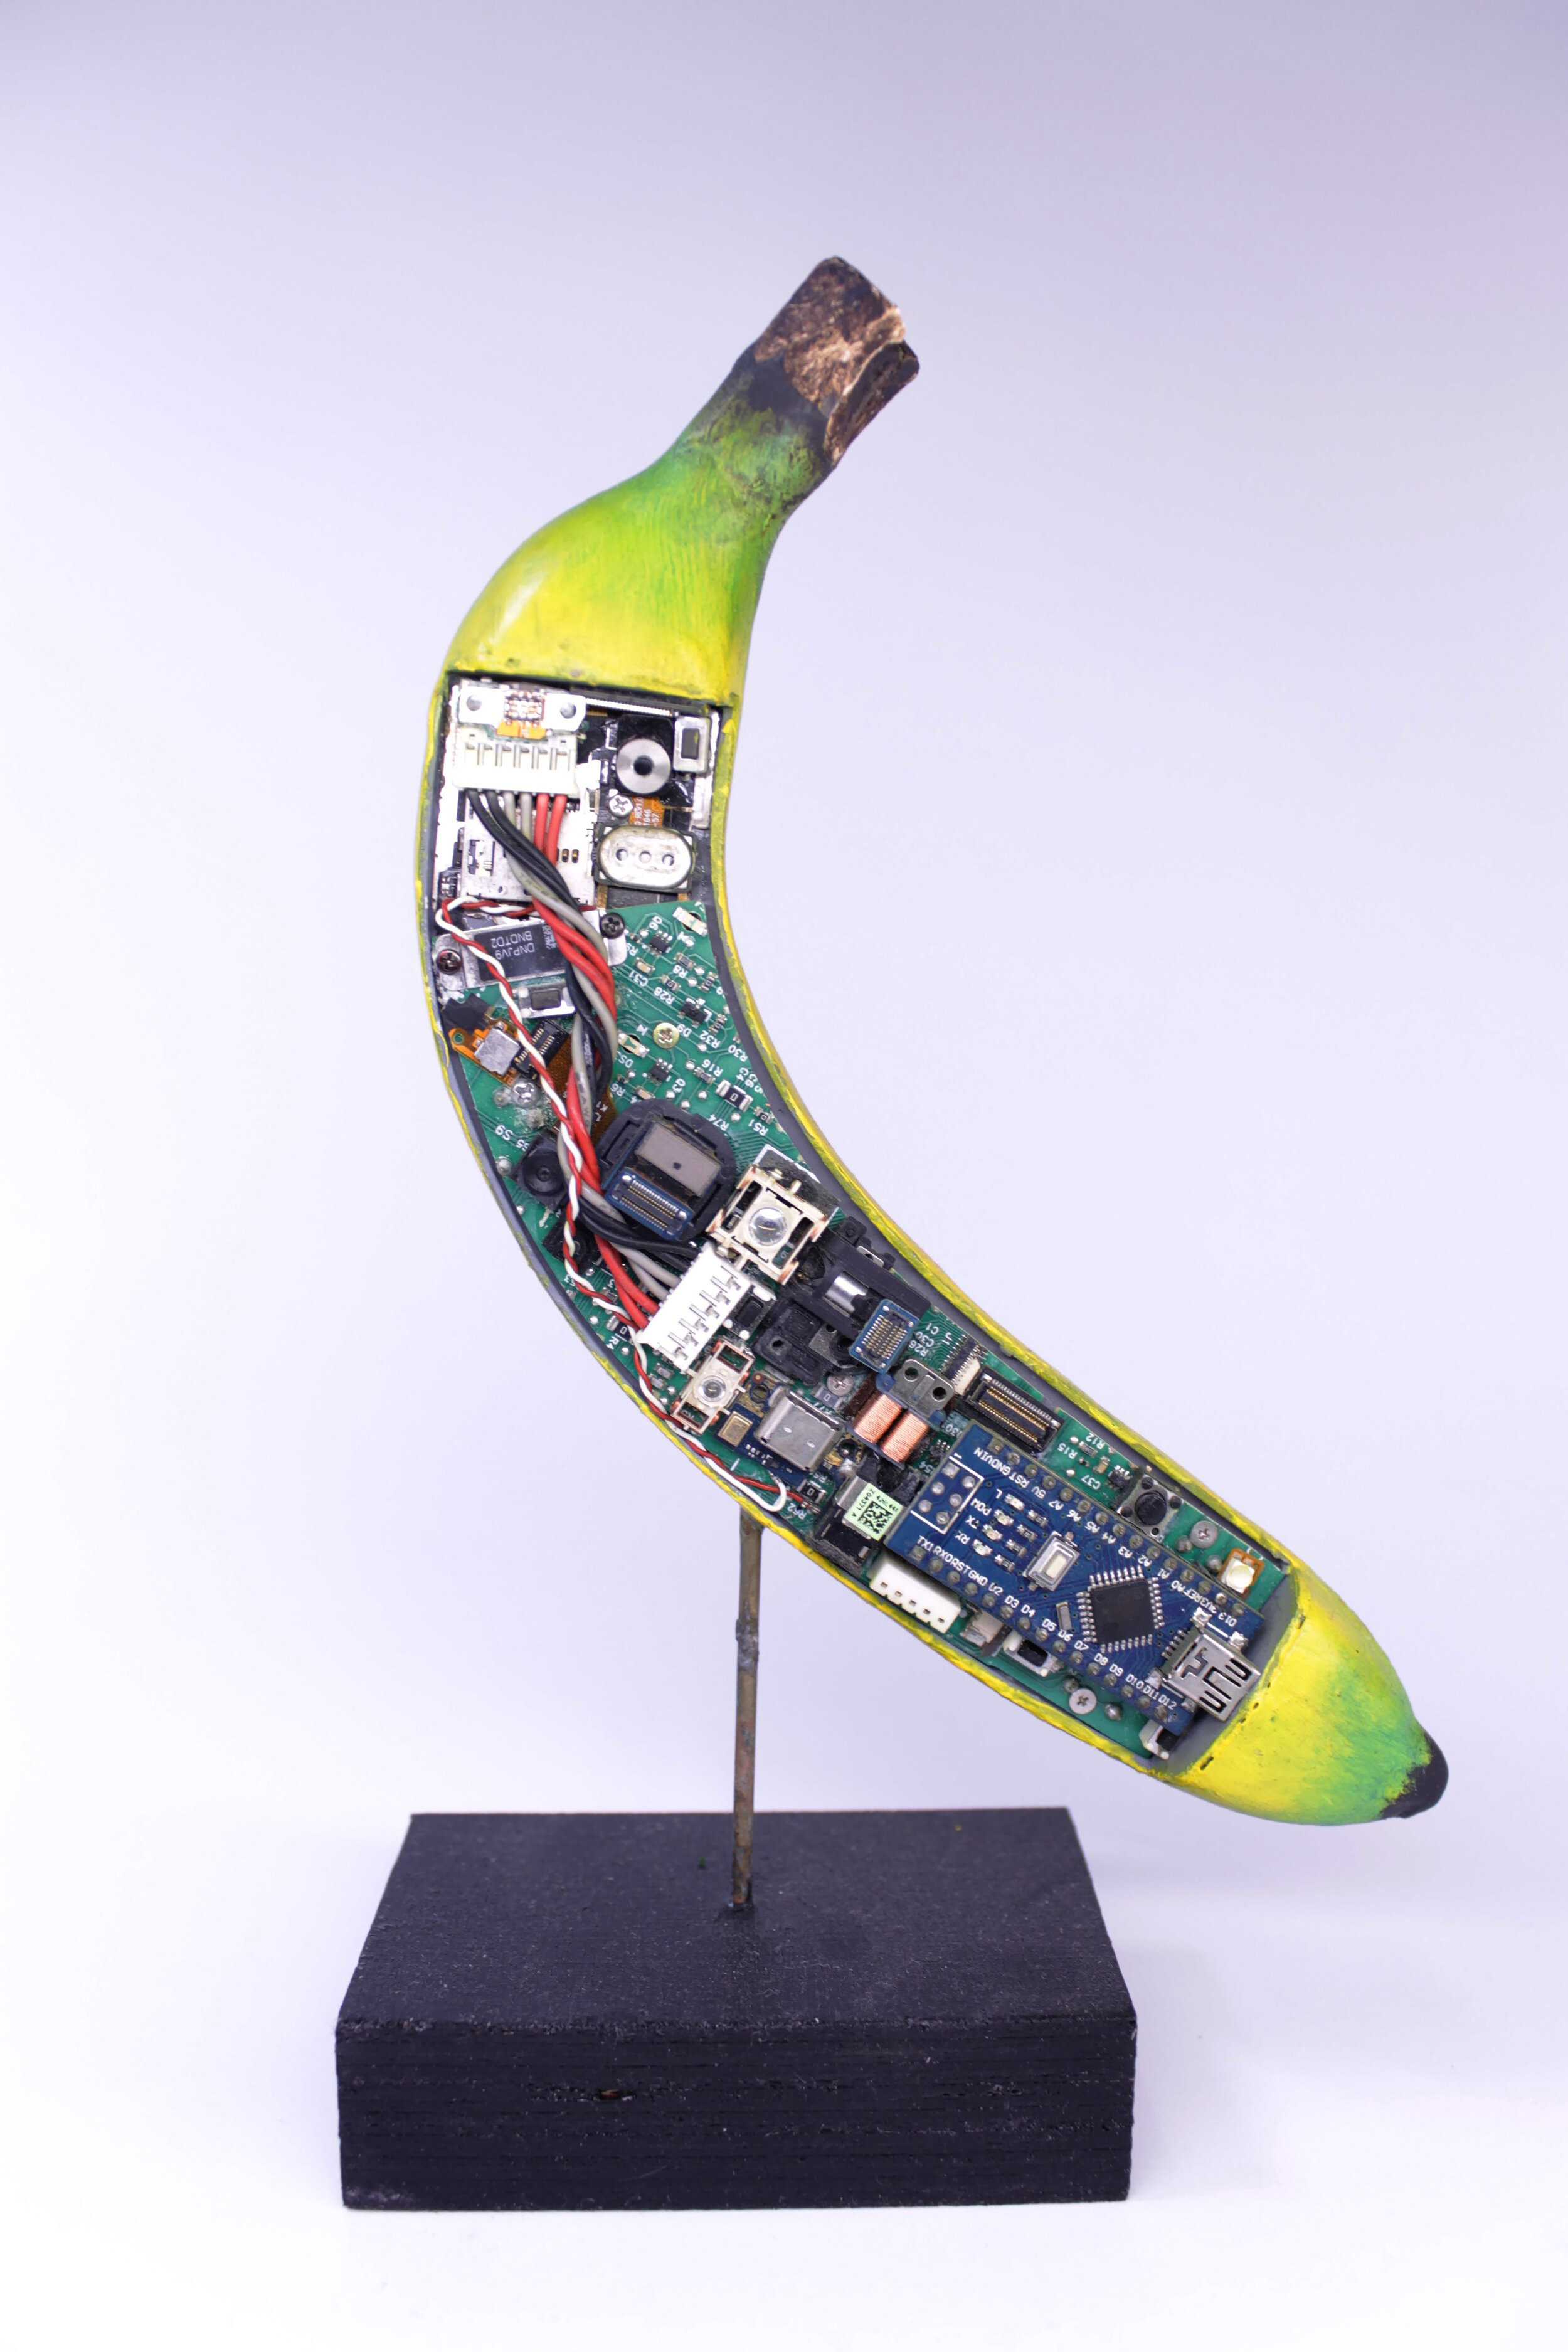 The Electric Banana